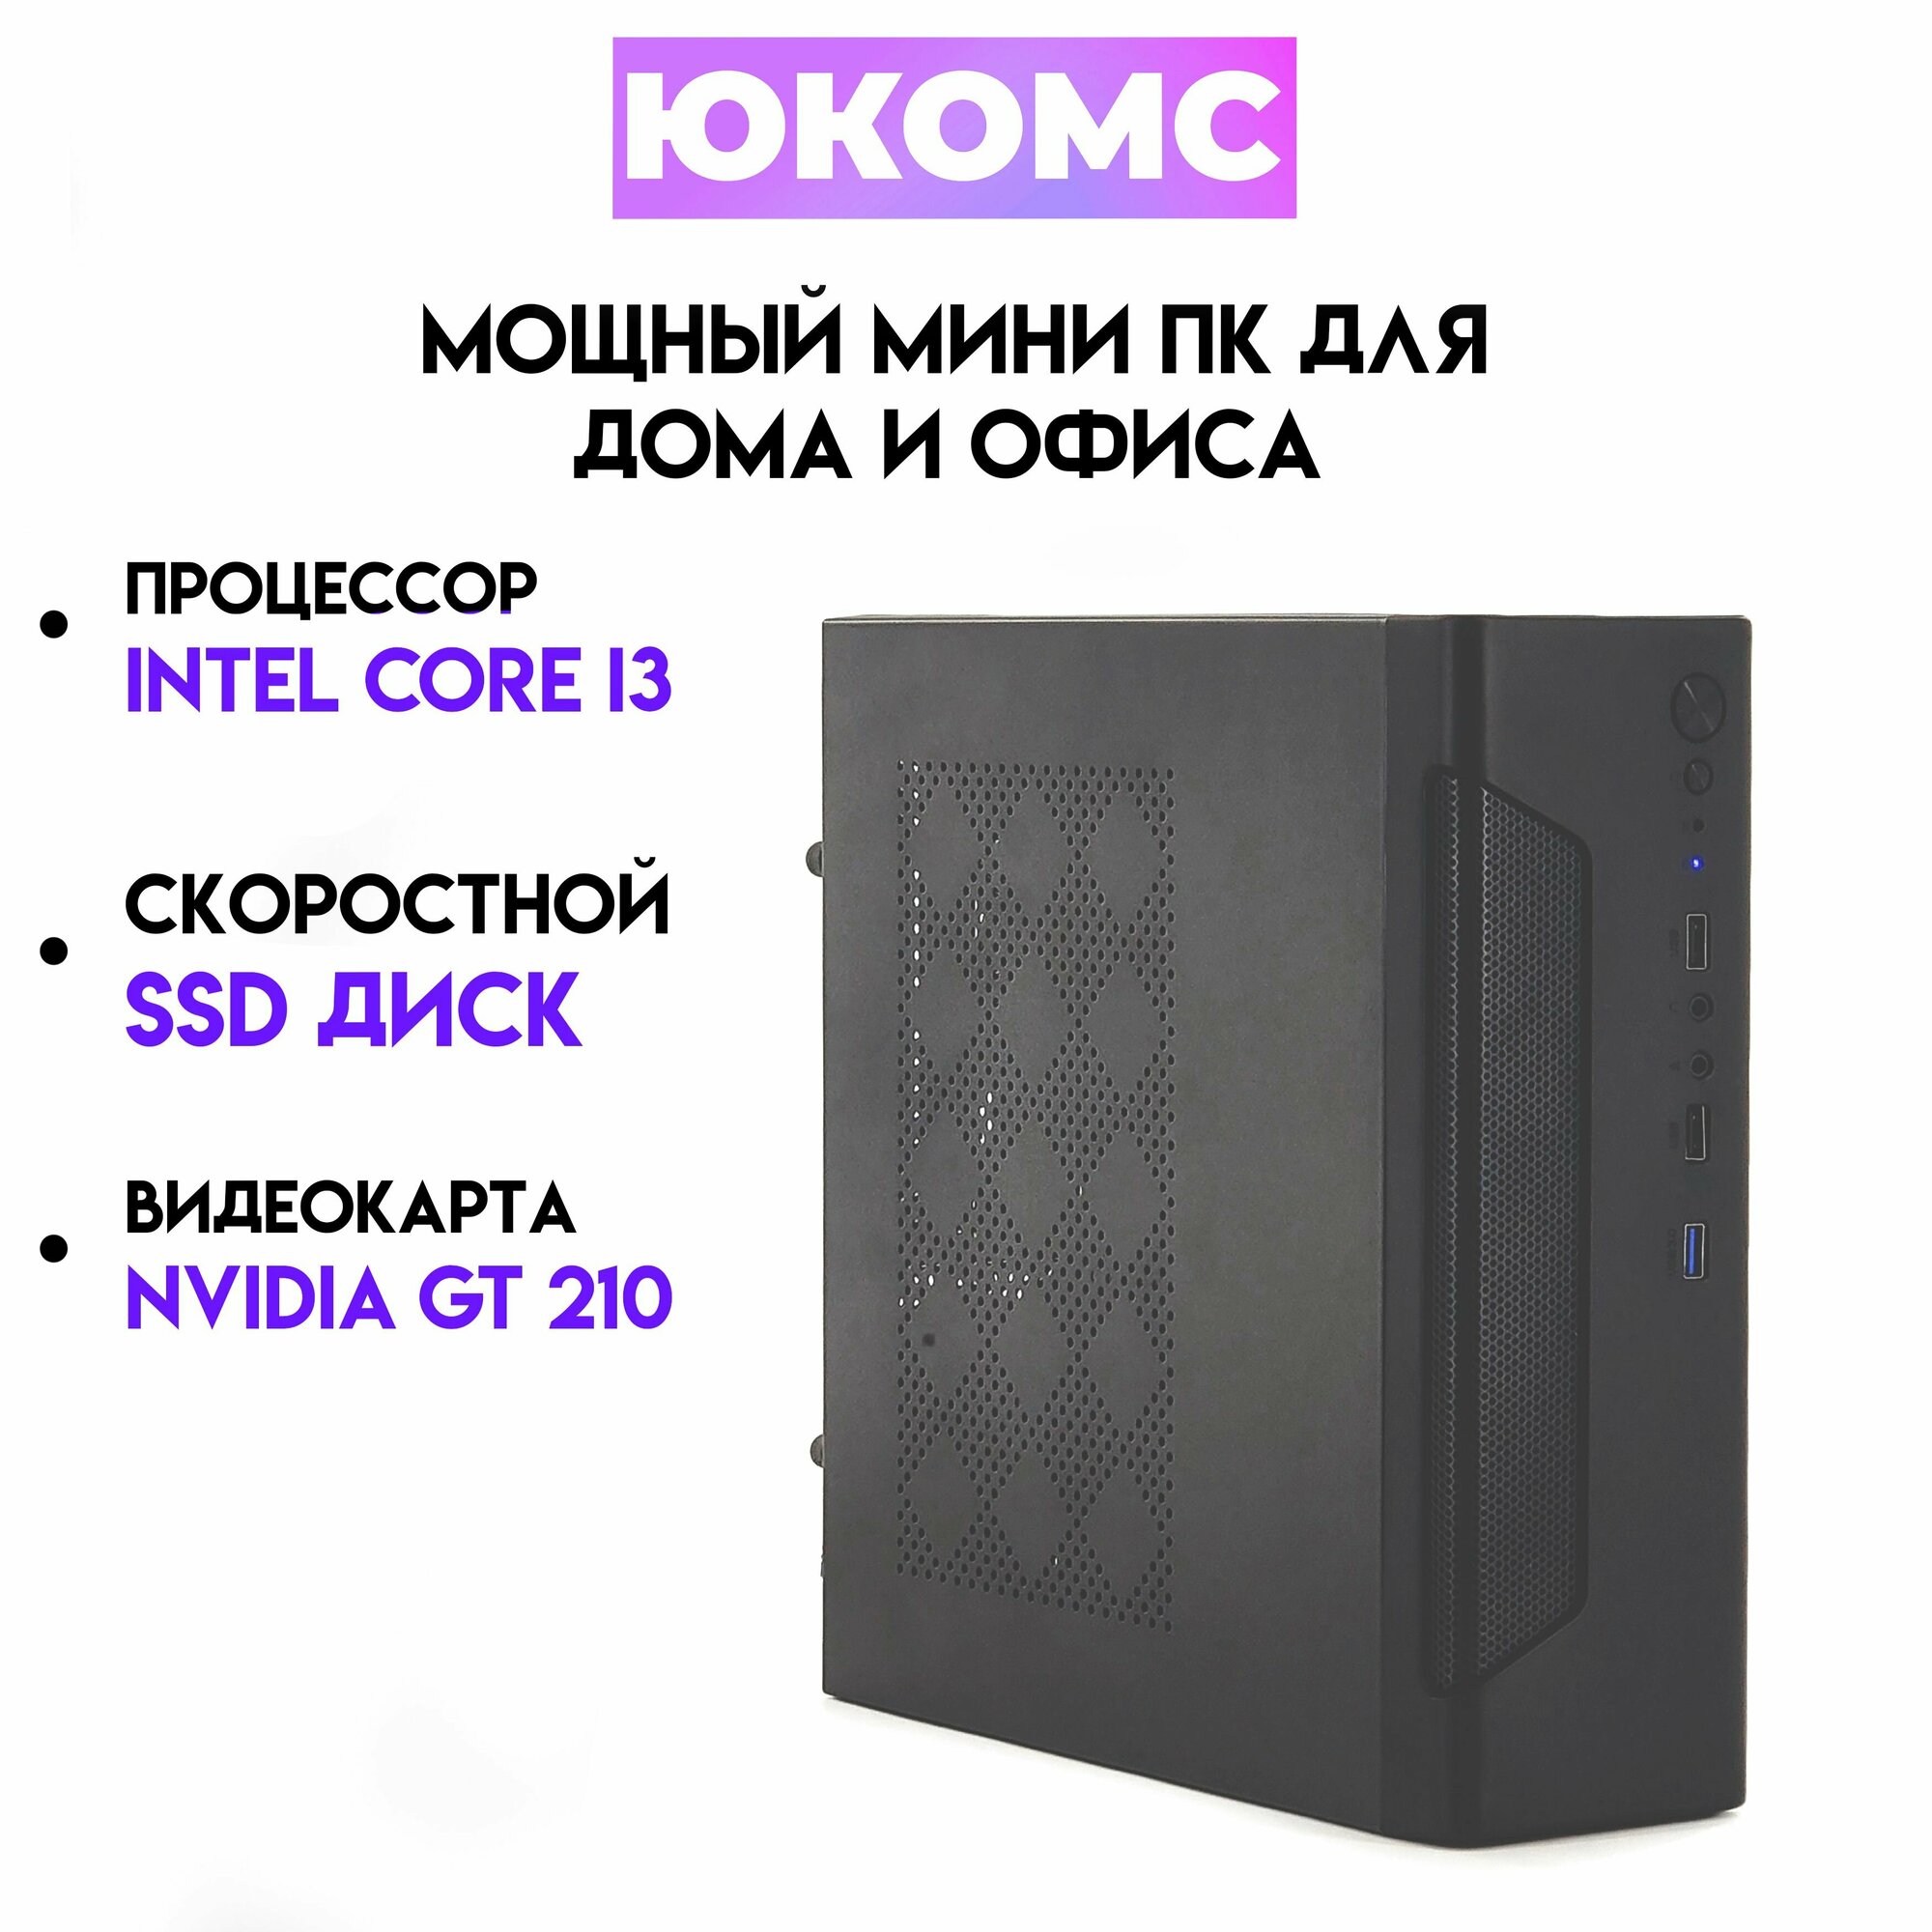 Мини PC юкомс Core i3 4150, GT 210 1GB, SSD 120GB, 4gb DDR3, БП 200w, win 10 pro, Exegate mini case